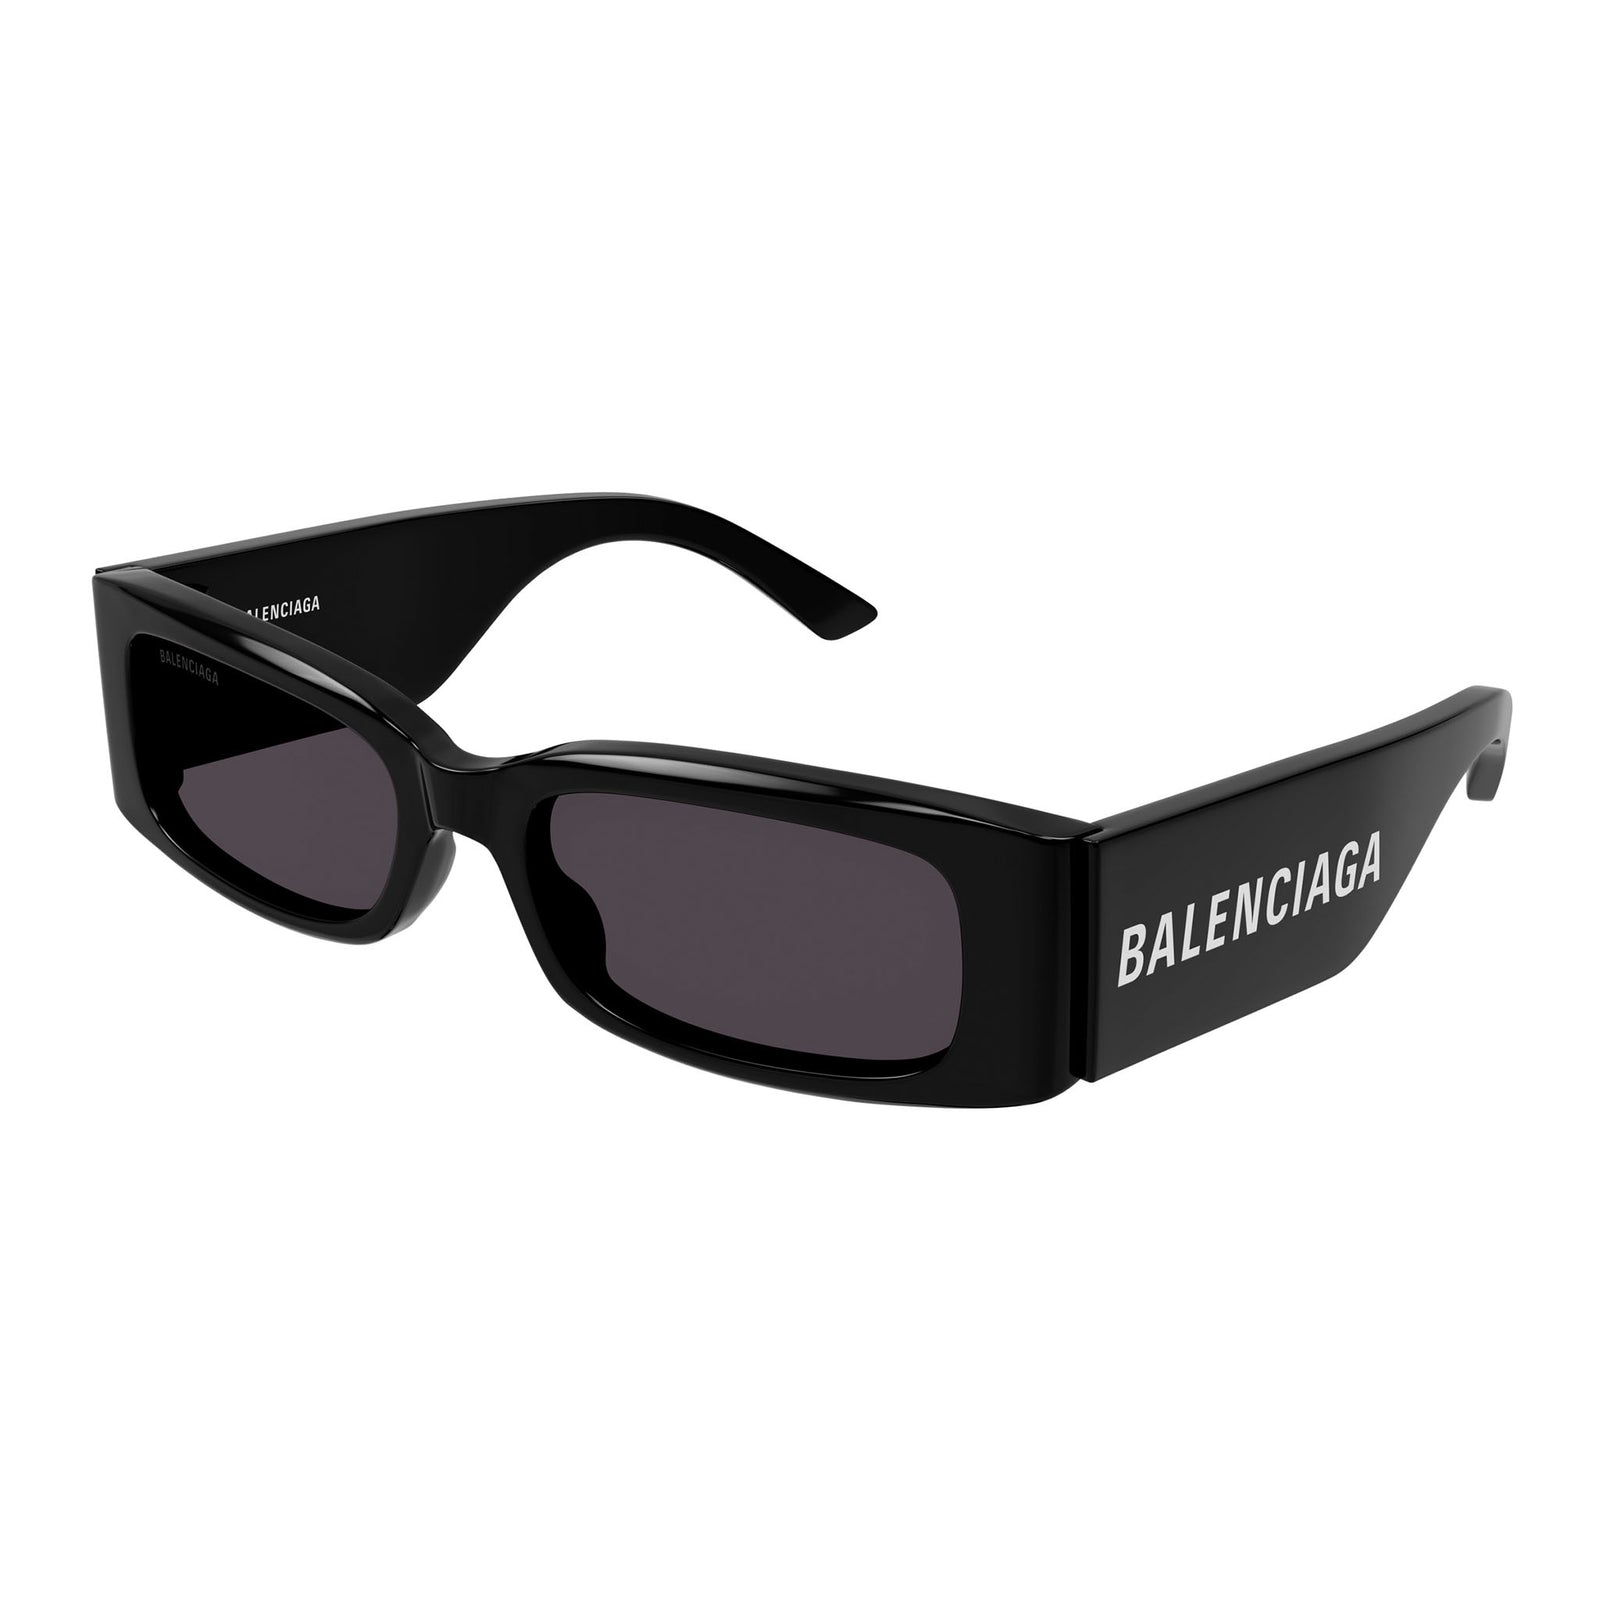 UNBOXING Balenciaga Sunglasses ModelBB0096S  YouTube